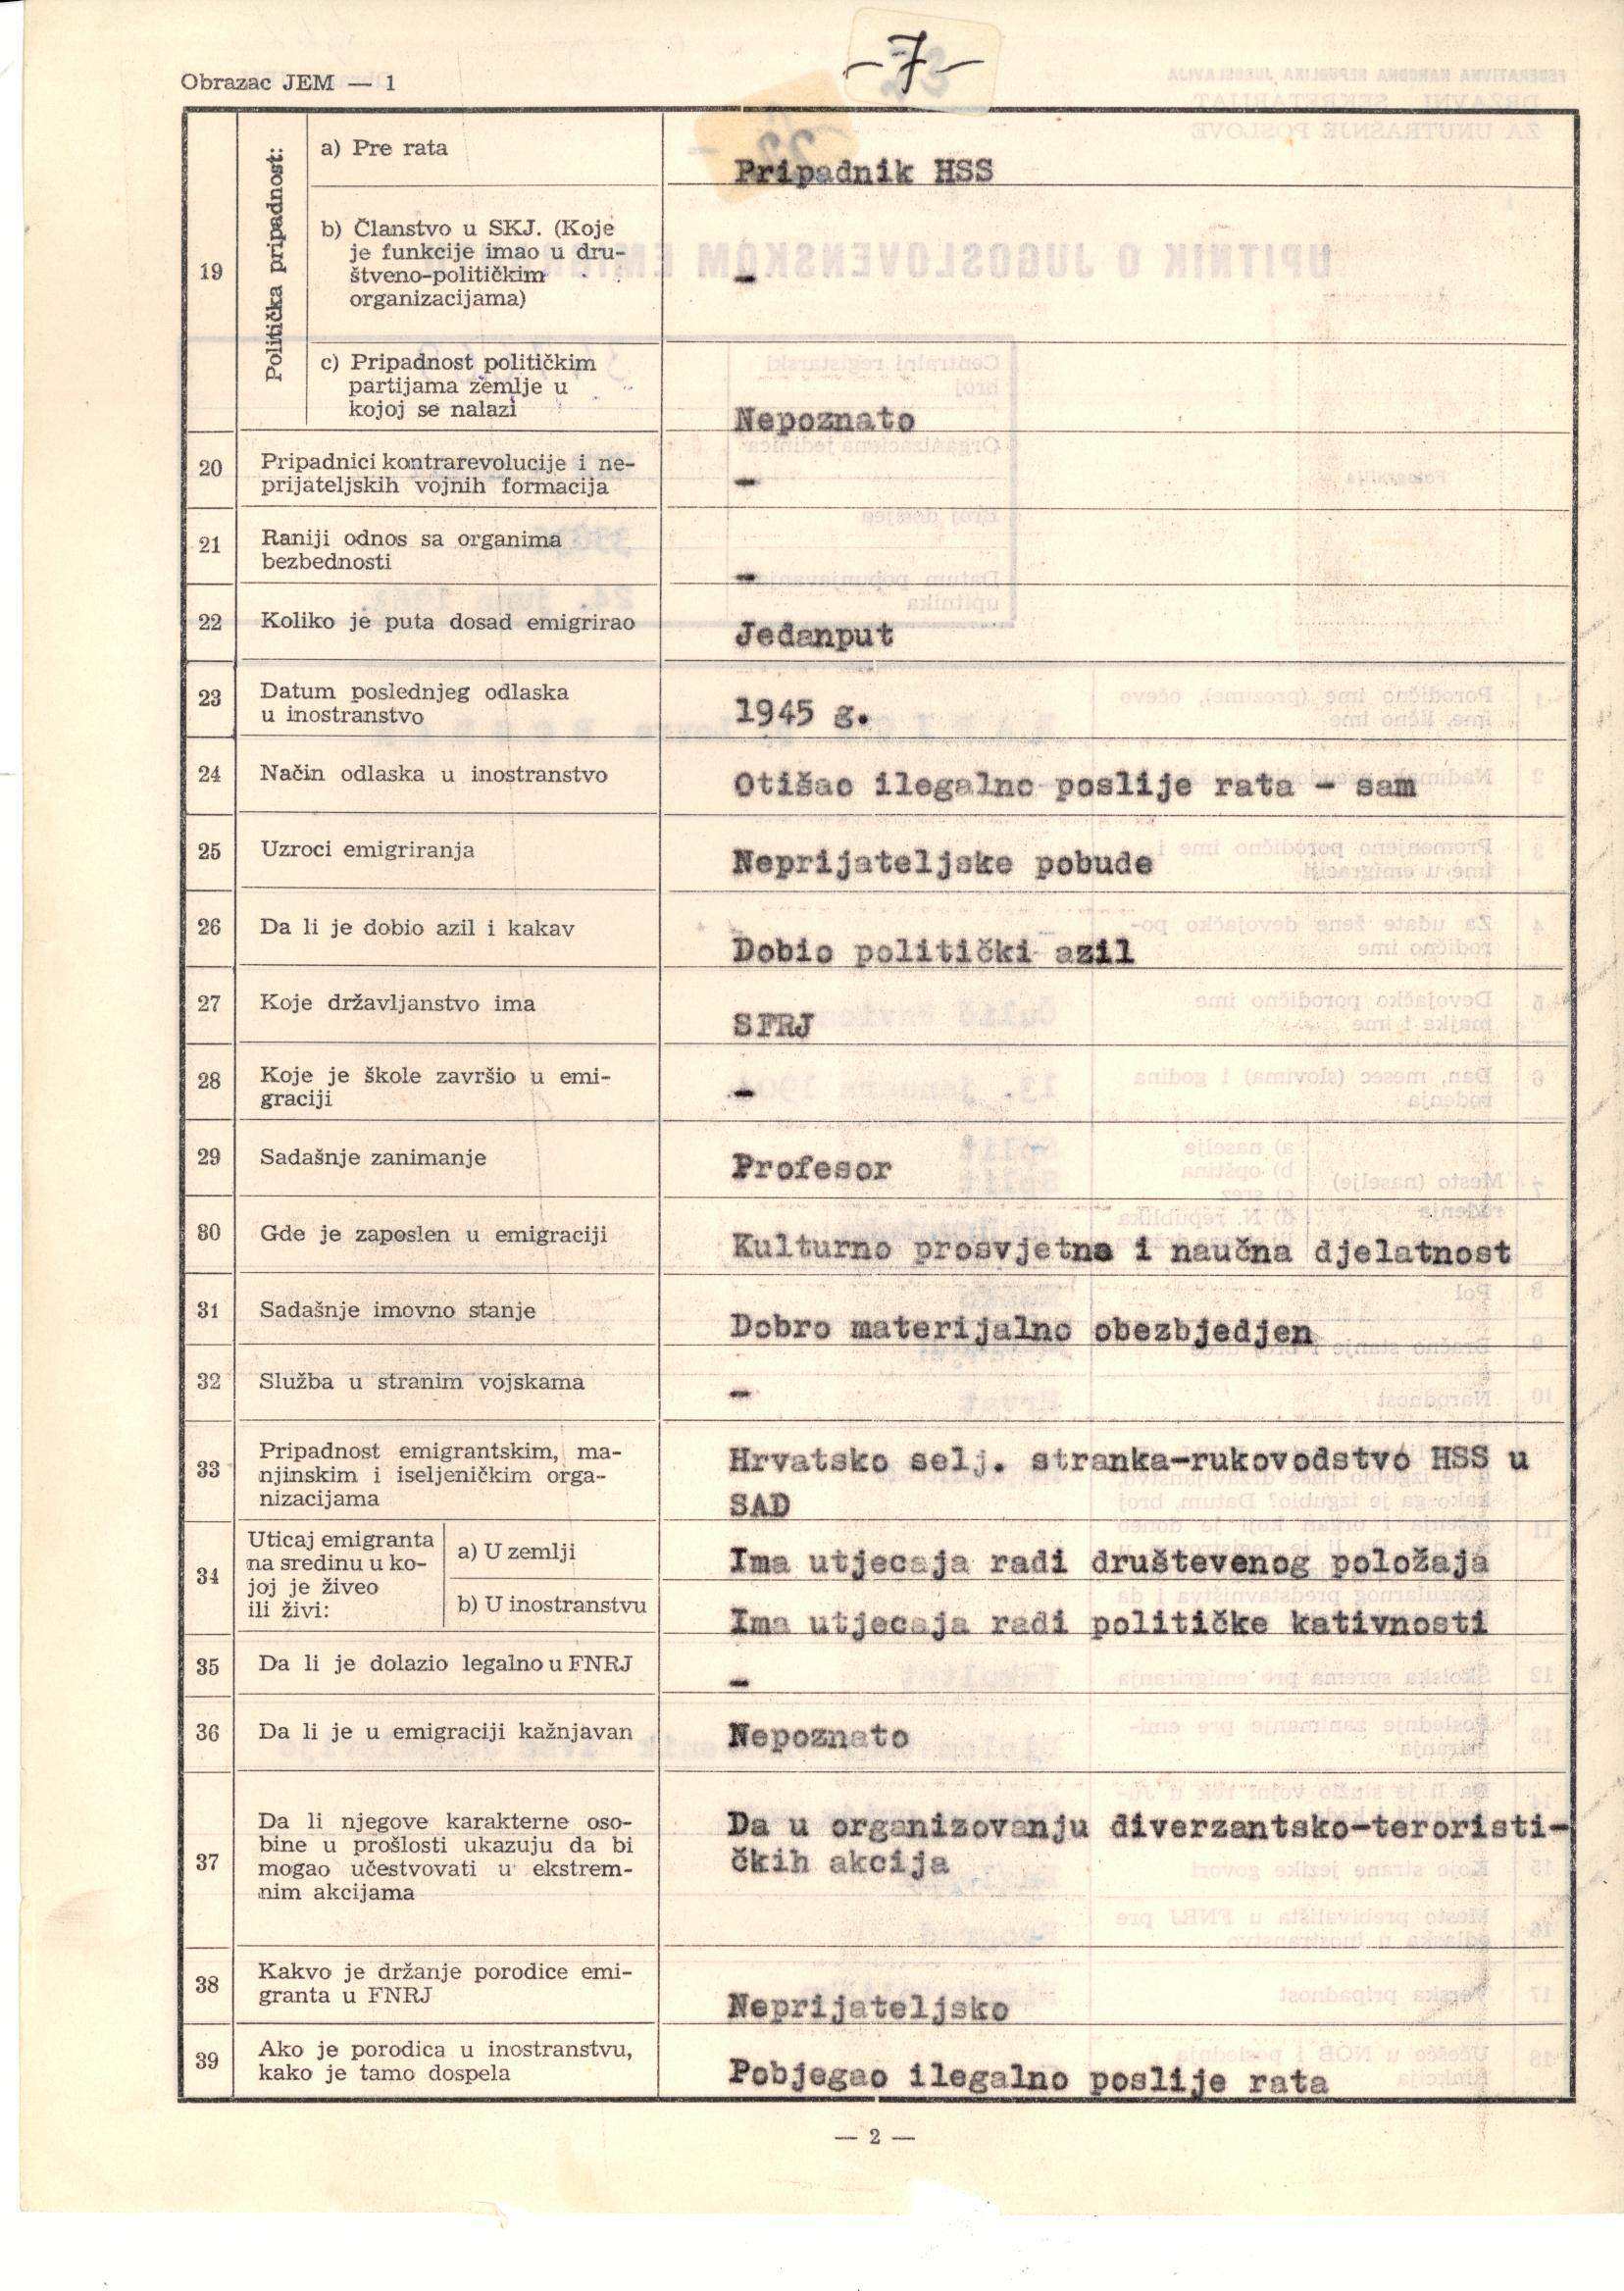 Questionnaire on the Yugoslav emigrant in Bogdan Radica's intelligence file. 24 June 1963. Archival document.